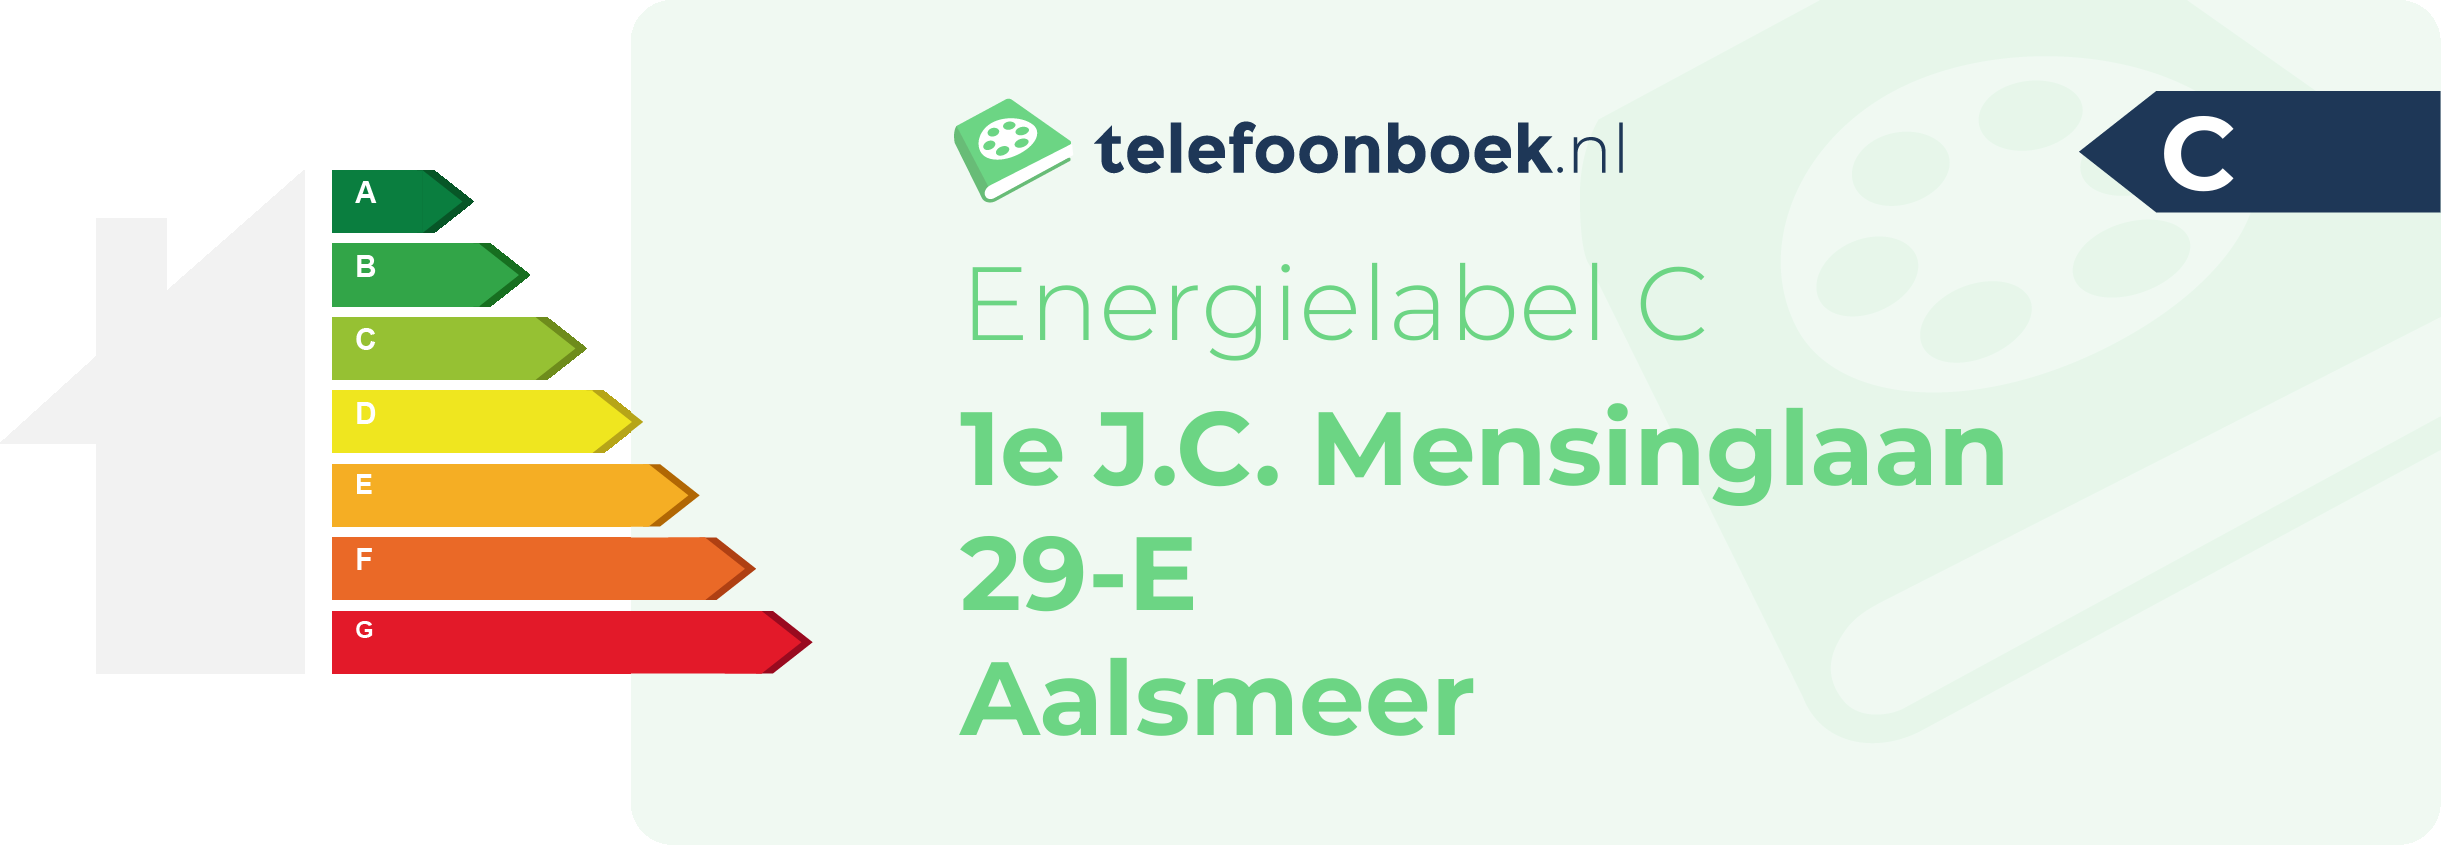 Energielabel 1e J.C. Mensinglaan 29-E Aalsmeer